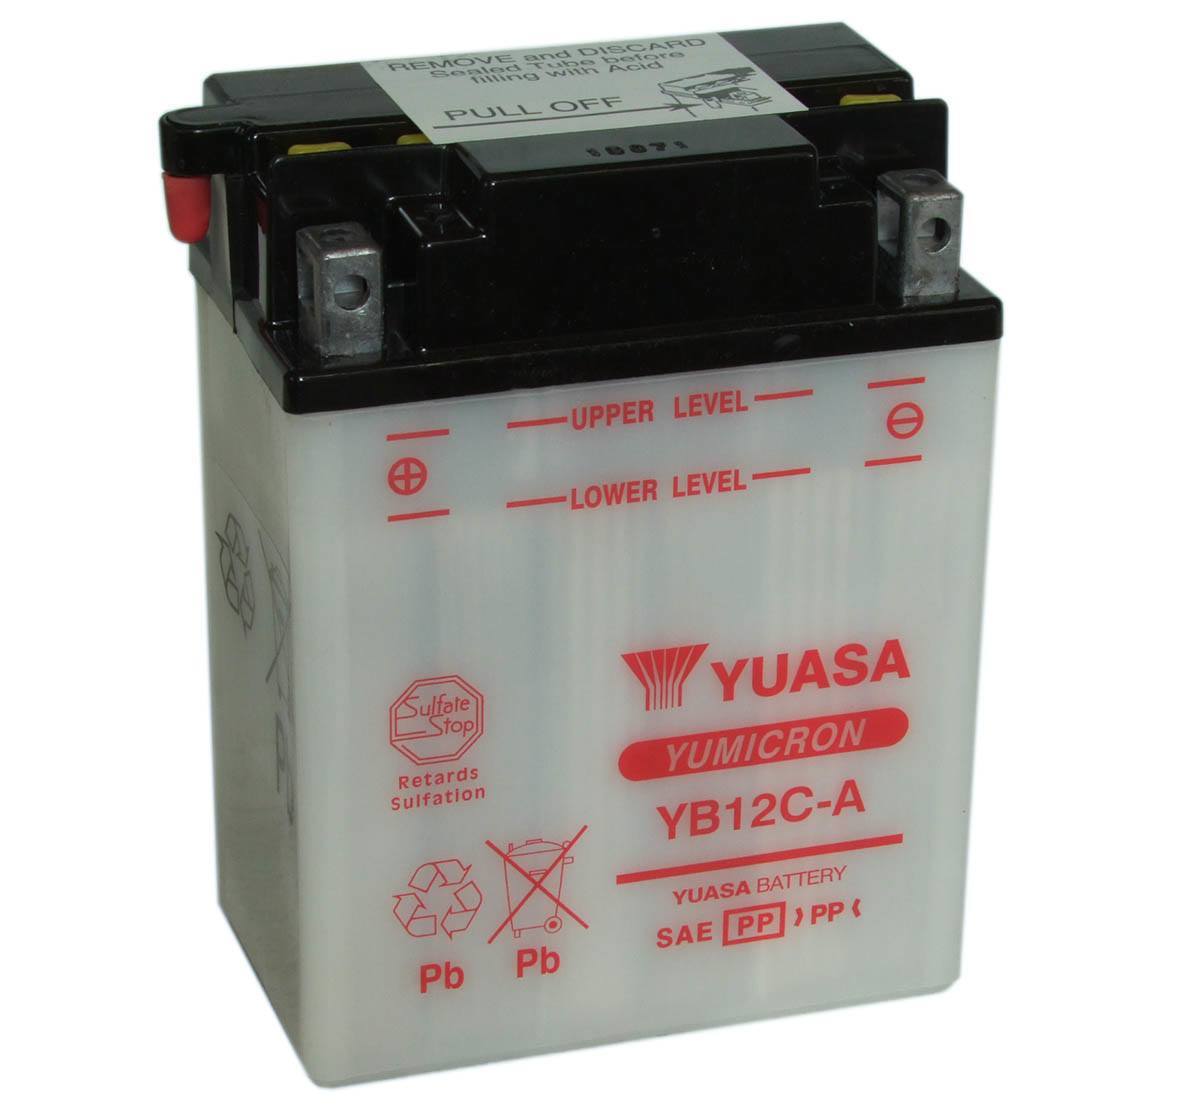 Yuasa YB12C-A 12V motorcycle battery